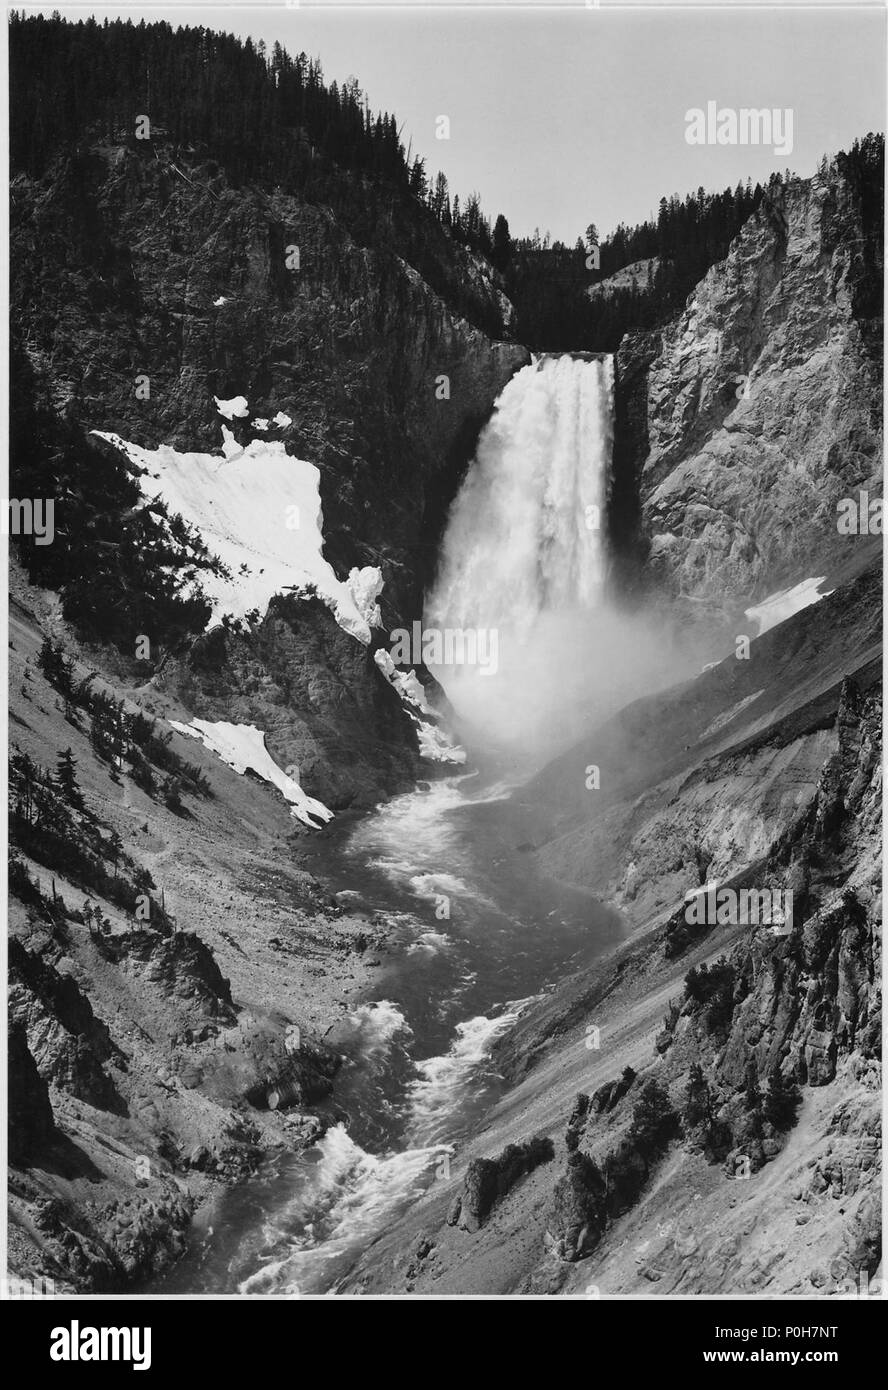 Chutes de Yellowstone, le Parc National de Yellowstone, Wyoming. (Orientation verticale), 1933 - 1942 - Banque D'Images